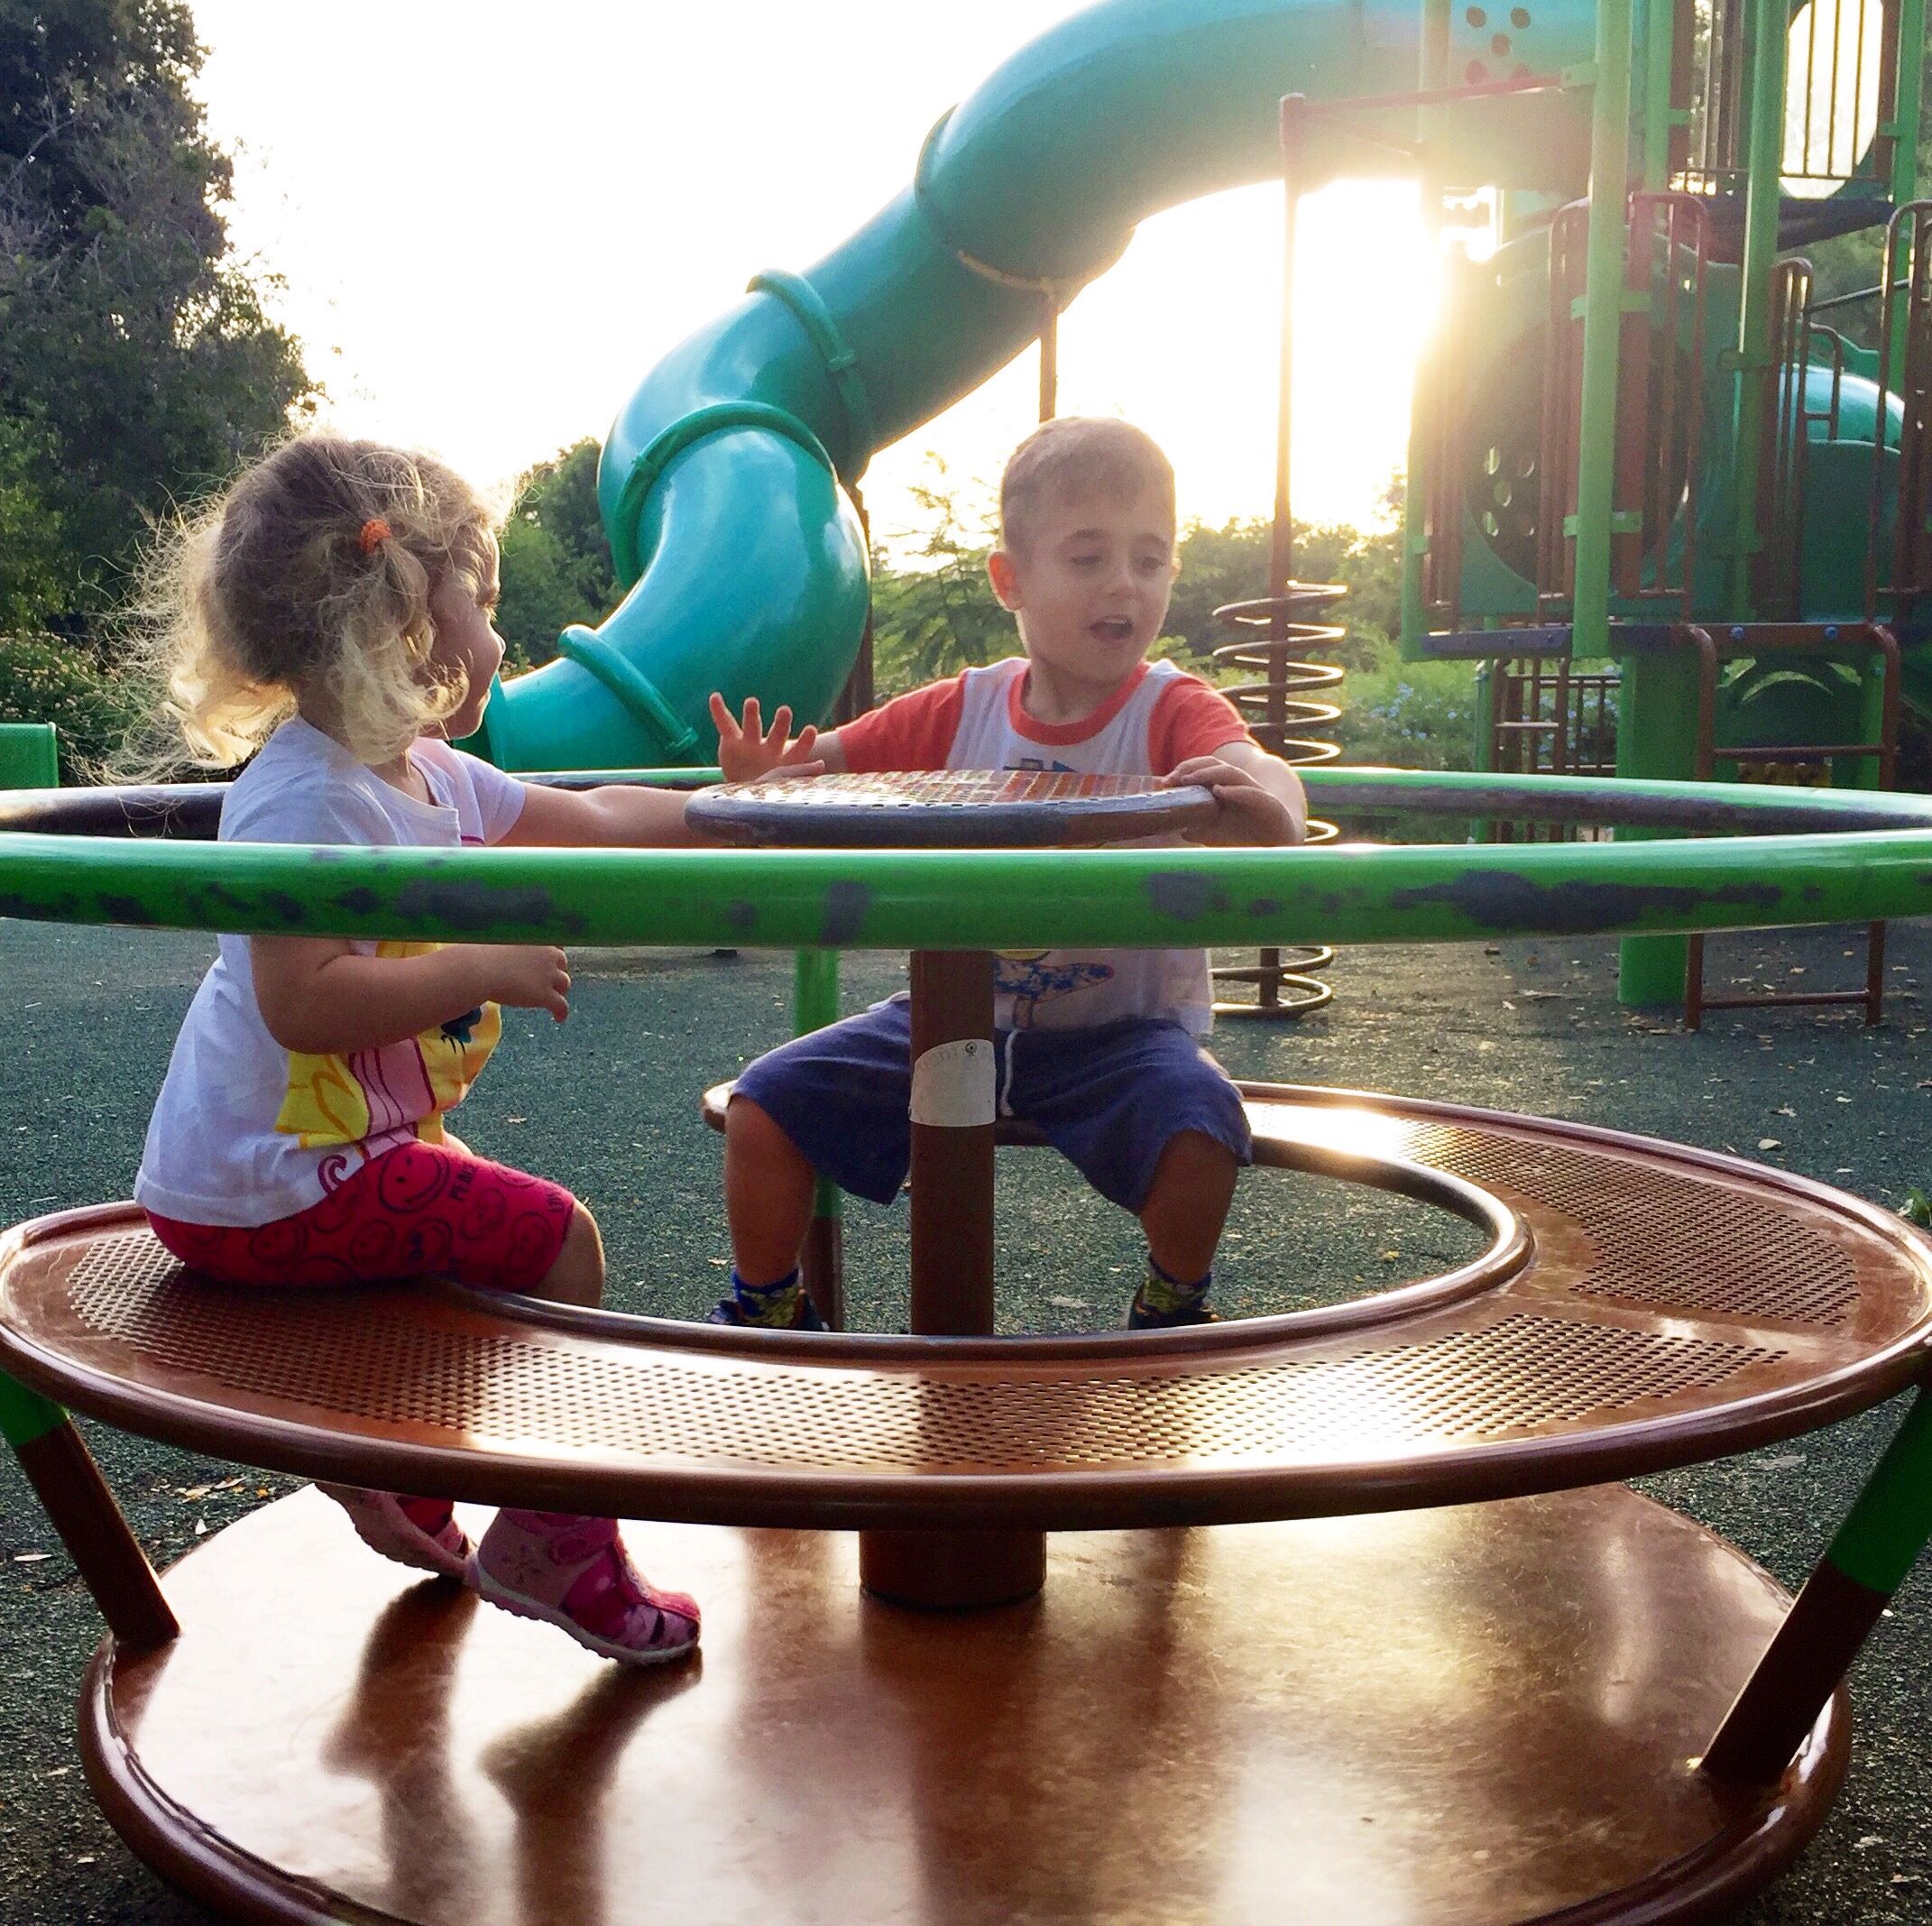 Kids have fun on playground rides